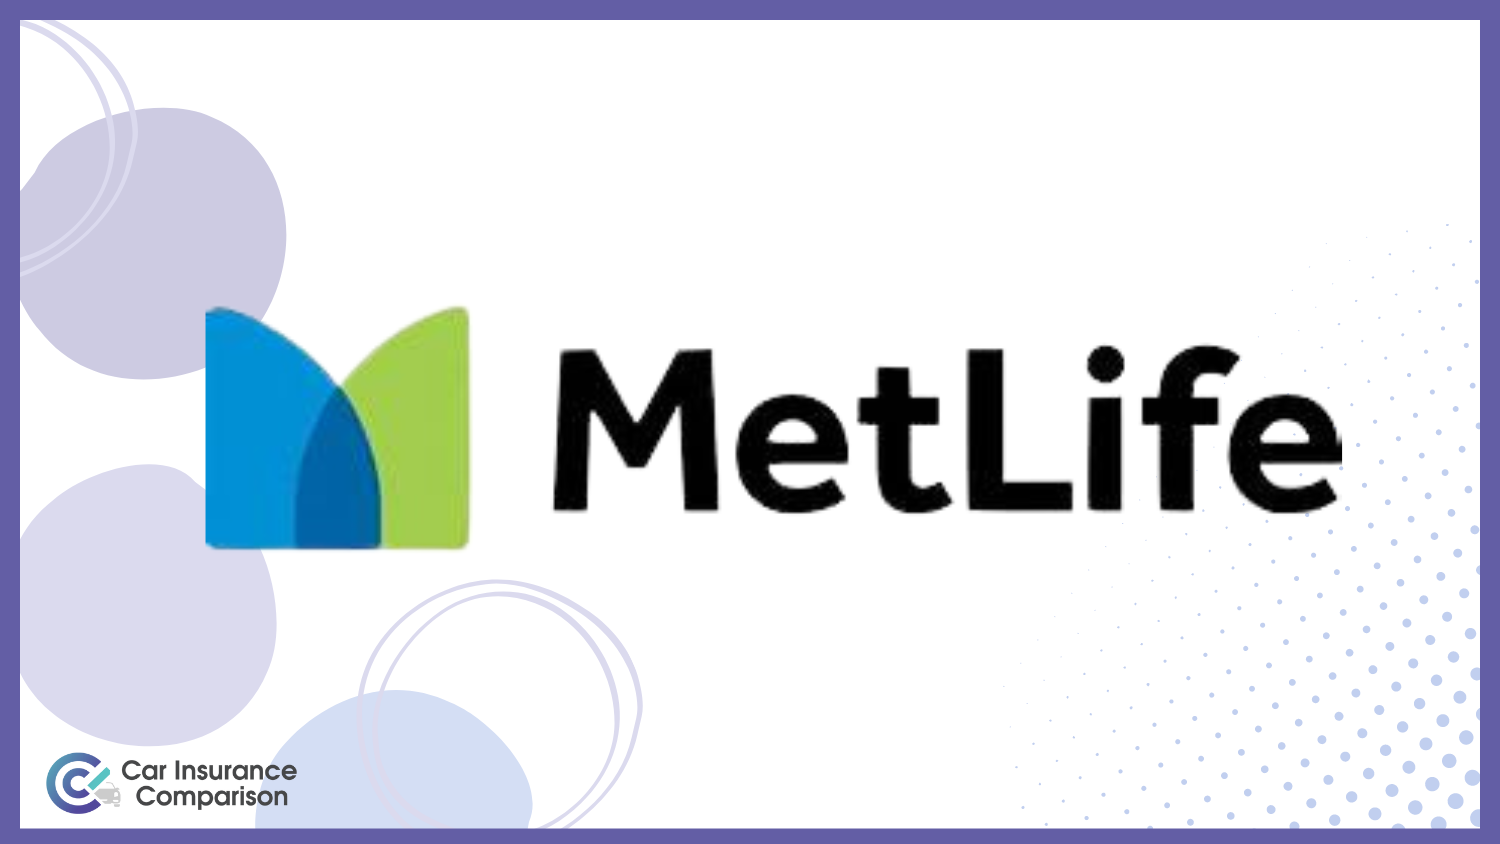 Best Amazon Flex Delivery Car Insurance: MetLife